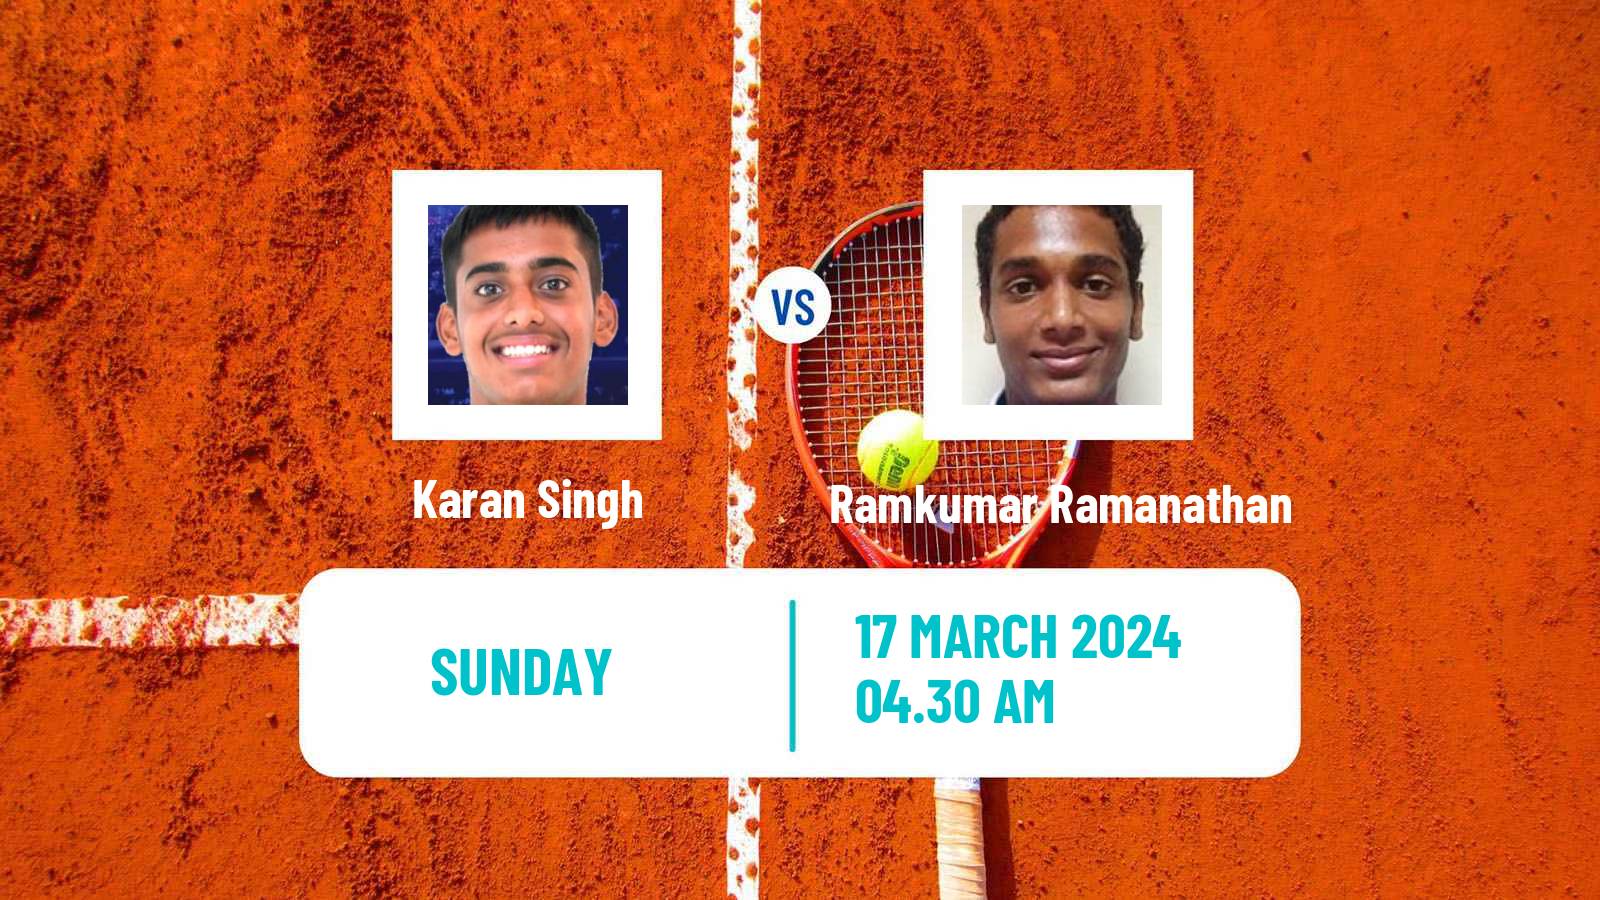 Tennis ITF M25 New Delhi Men Karan Singh - Ramkumar Ramanathan